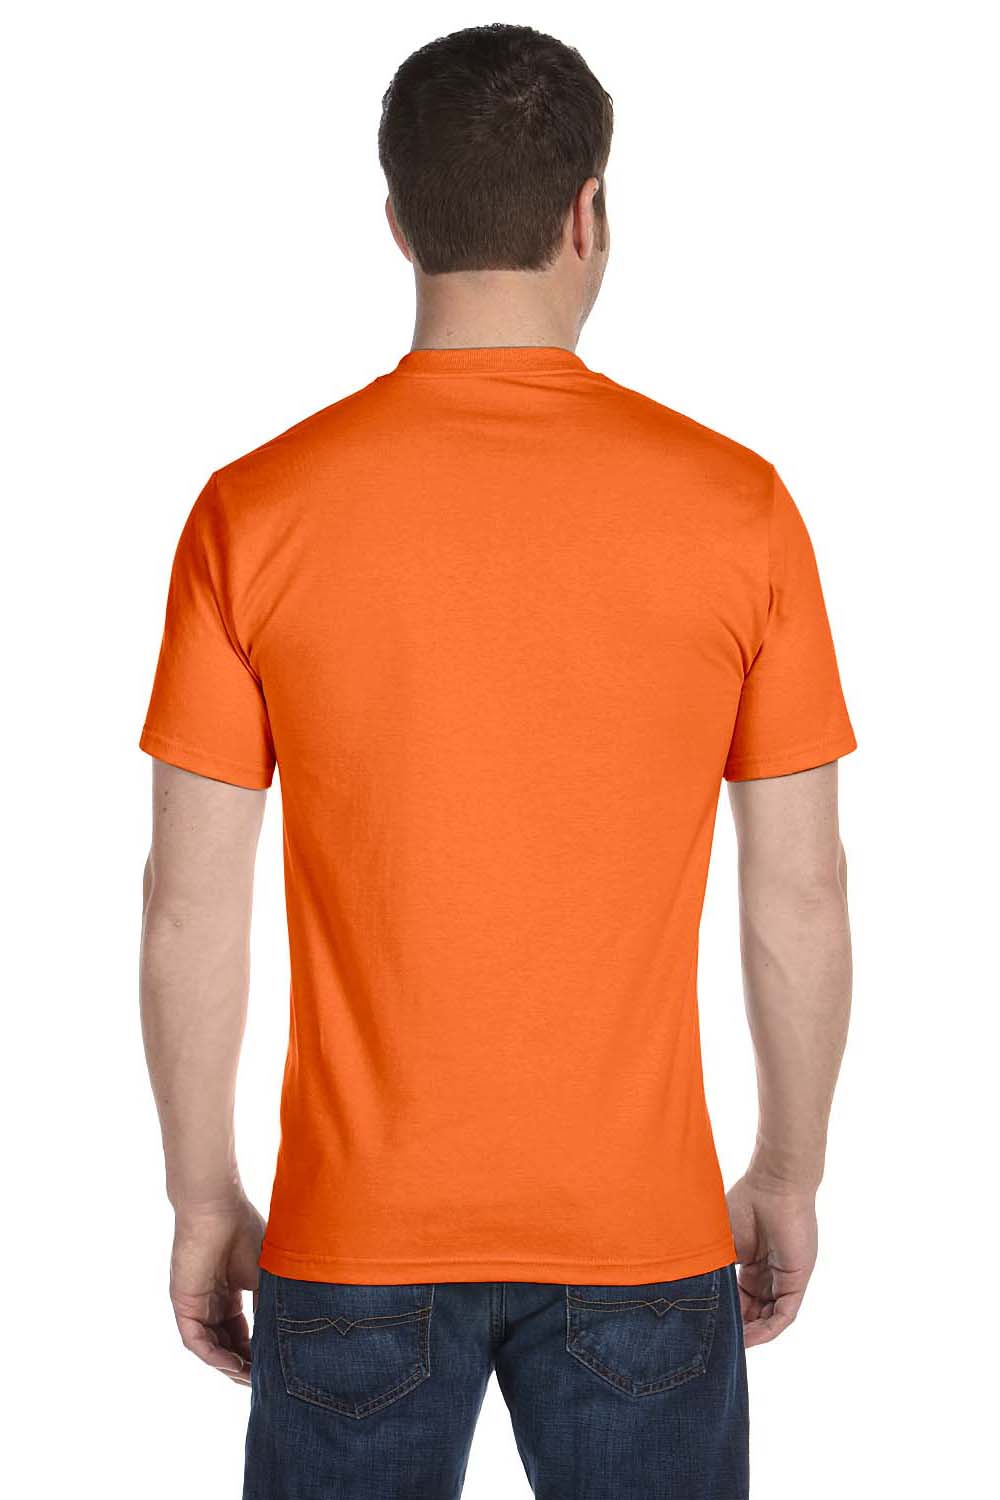 Hanes 5180 Mens Beefy-T Short Sleeve Crewneck T-Shirt Orange Back